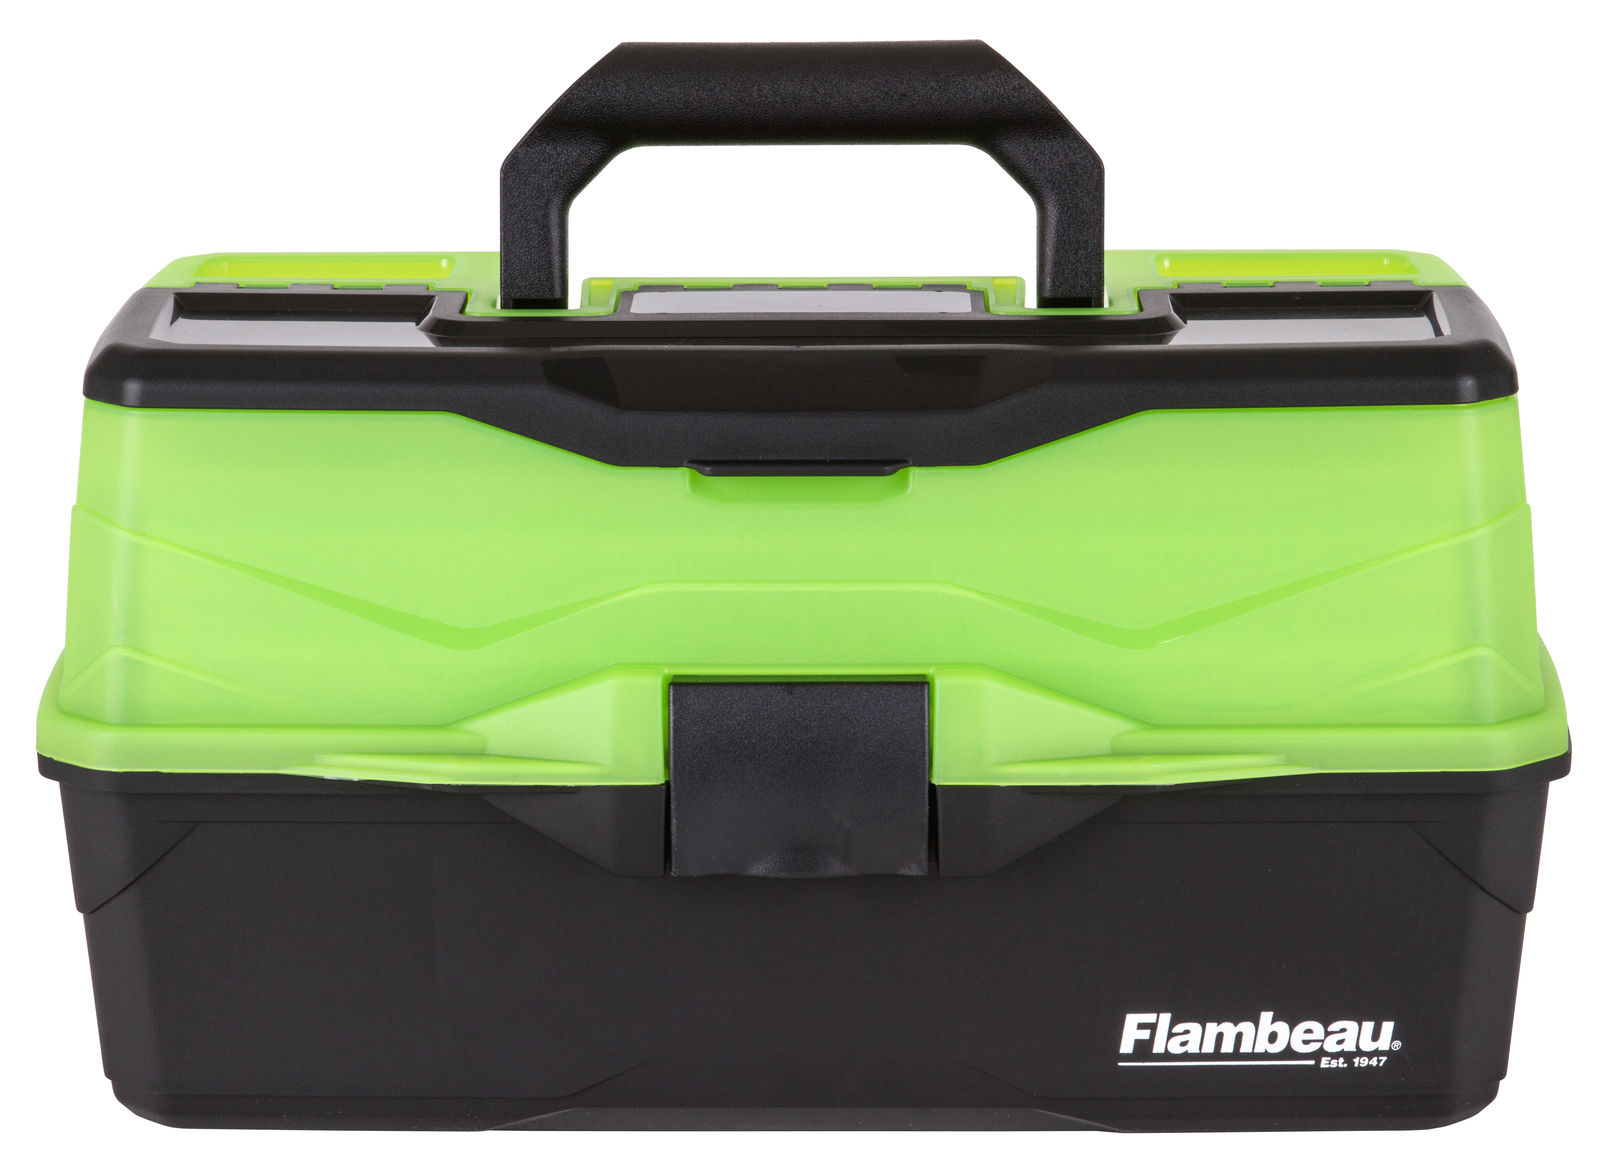 Flambeau Classic Viskoffer - Classic 3-Tray Frost Series Green